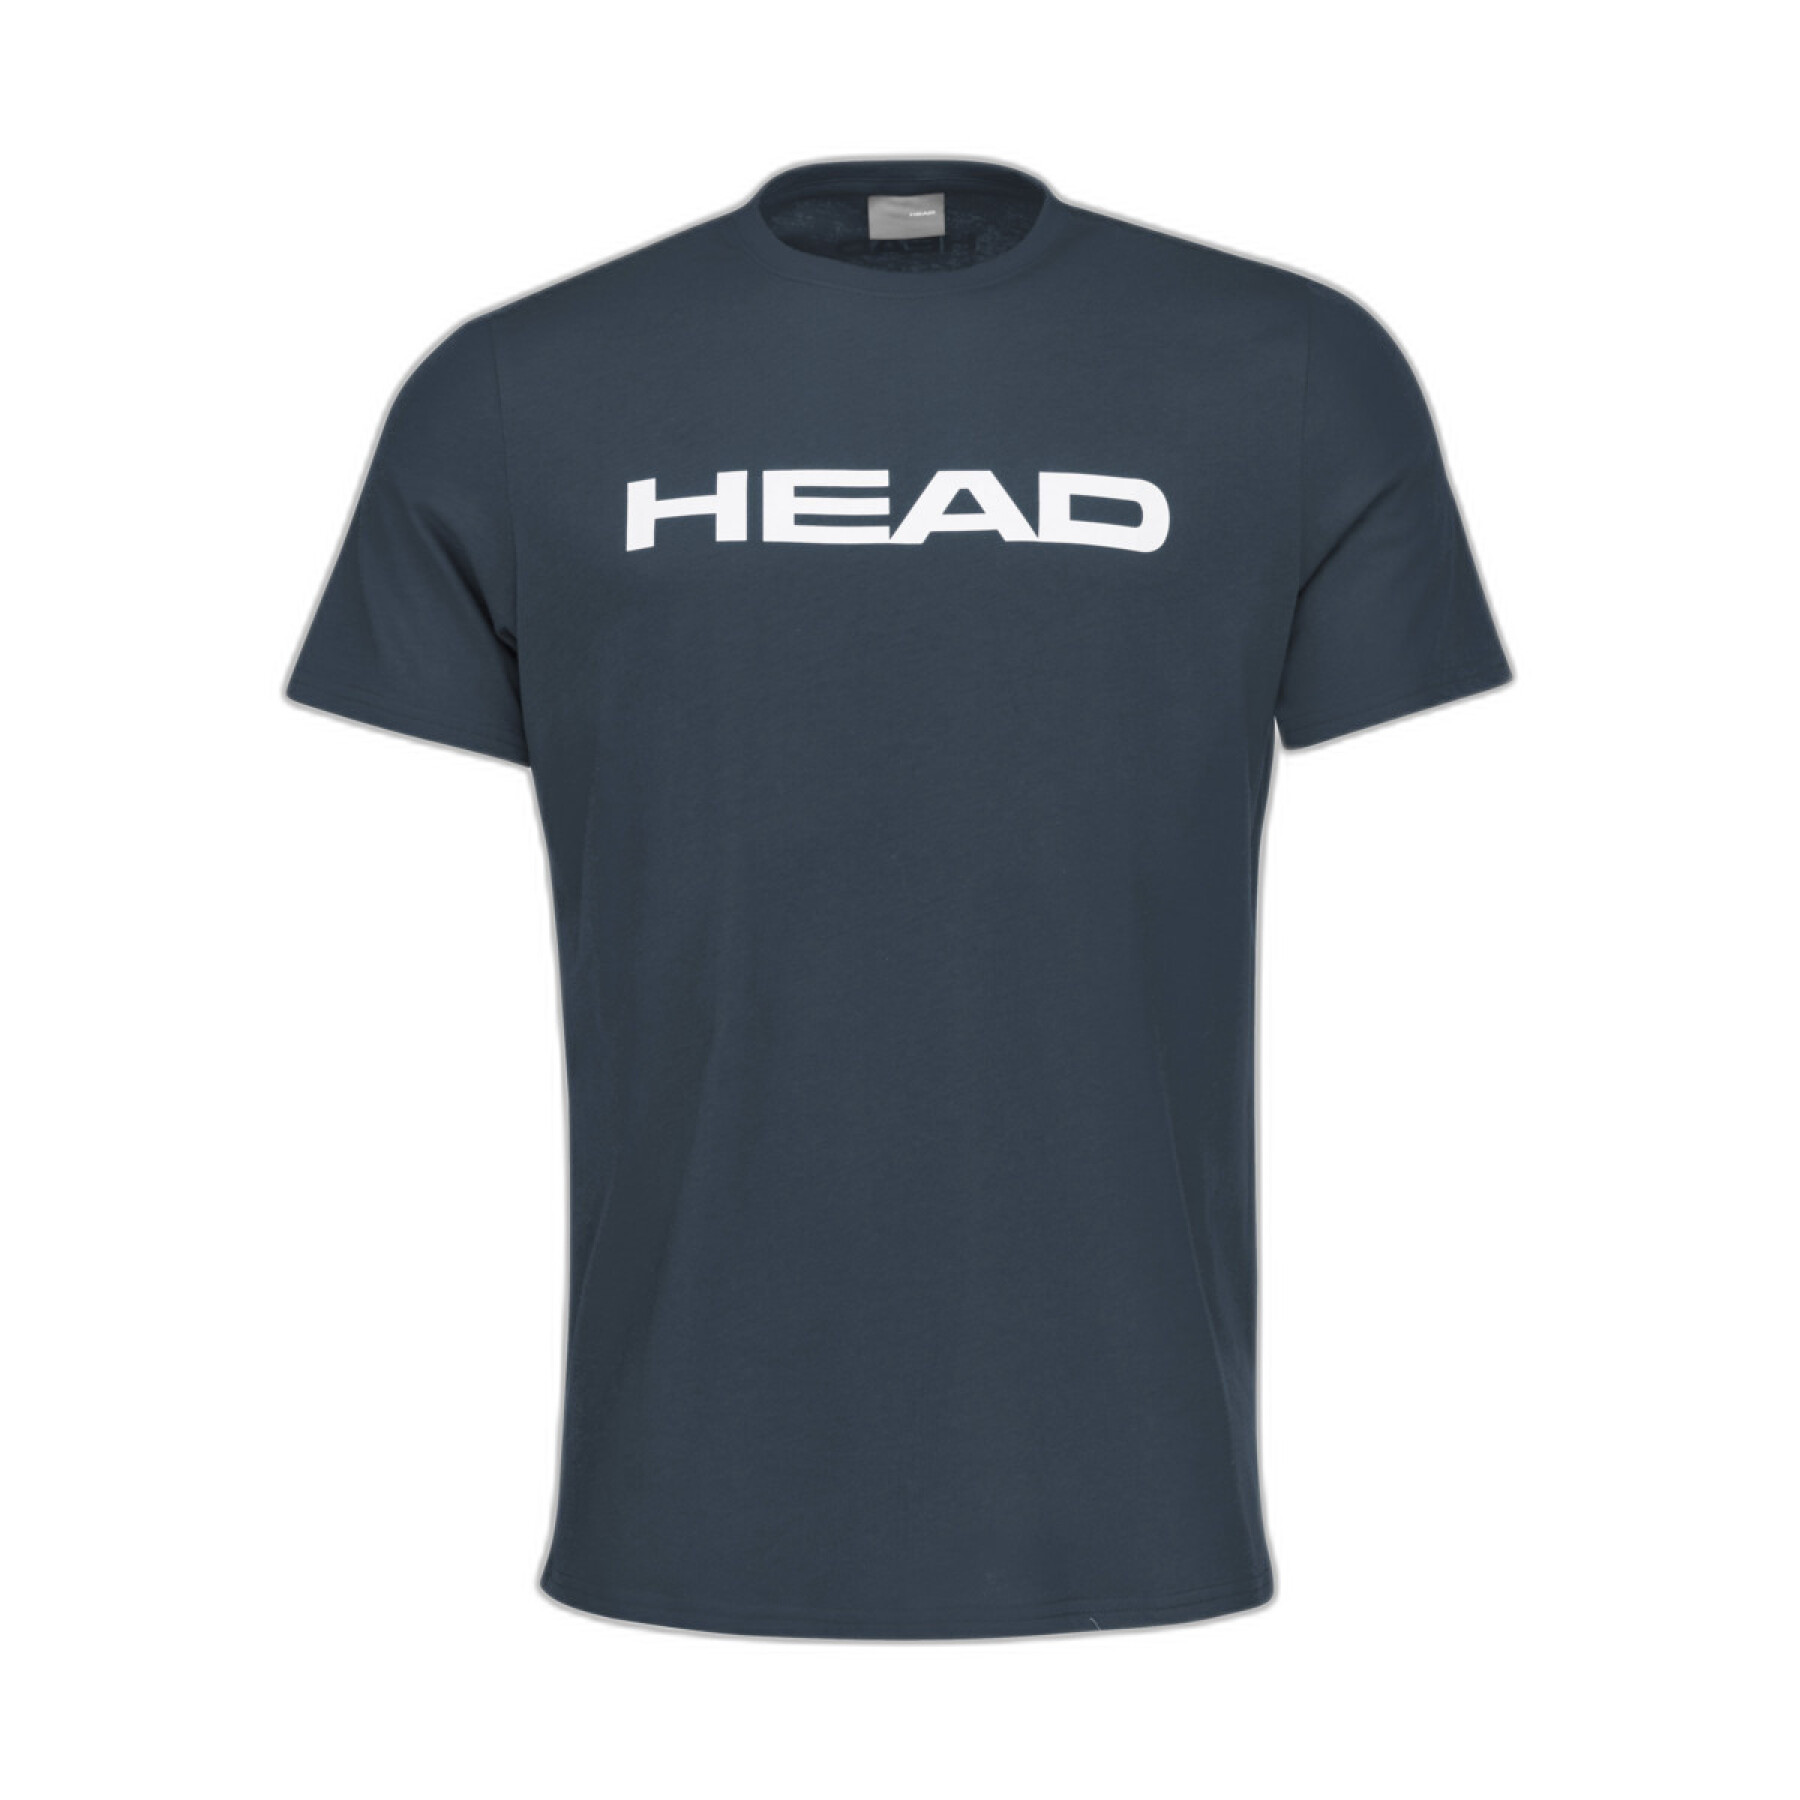 Kinder-T-shirt Head Club Basic